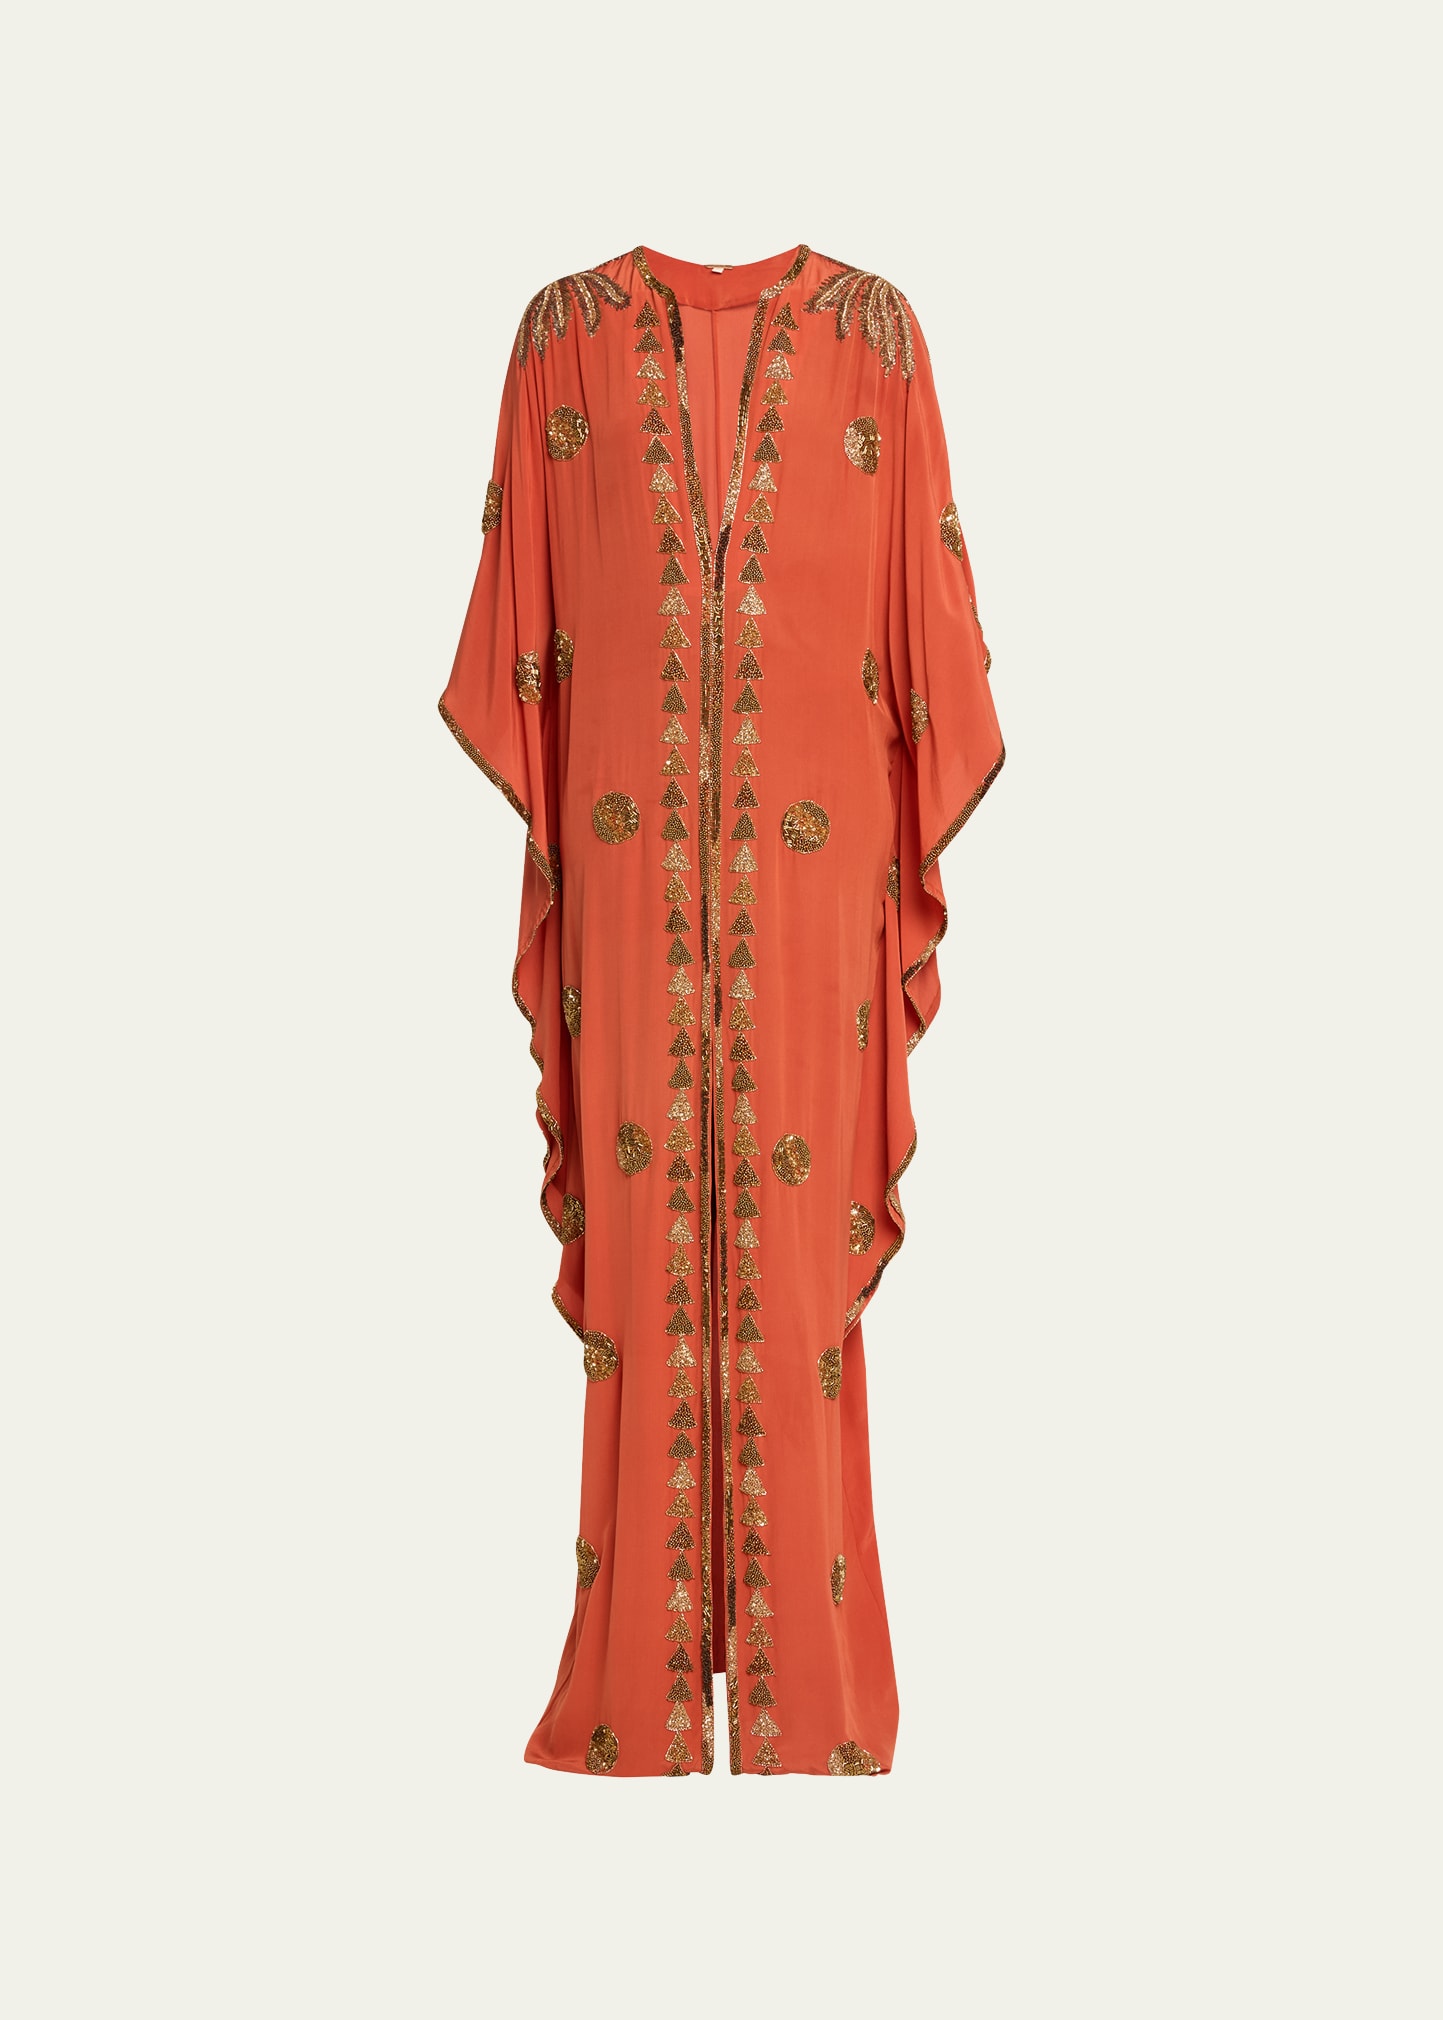 JOHANNA ORTIZ MYSTICAL GAUCHO SEQUINED BEADED TUNIC DRESS